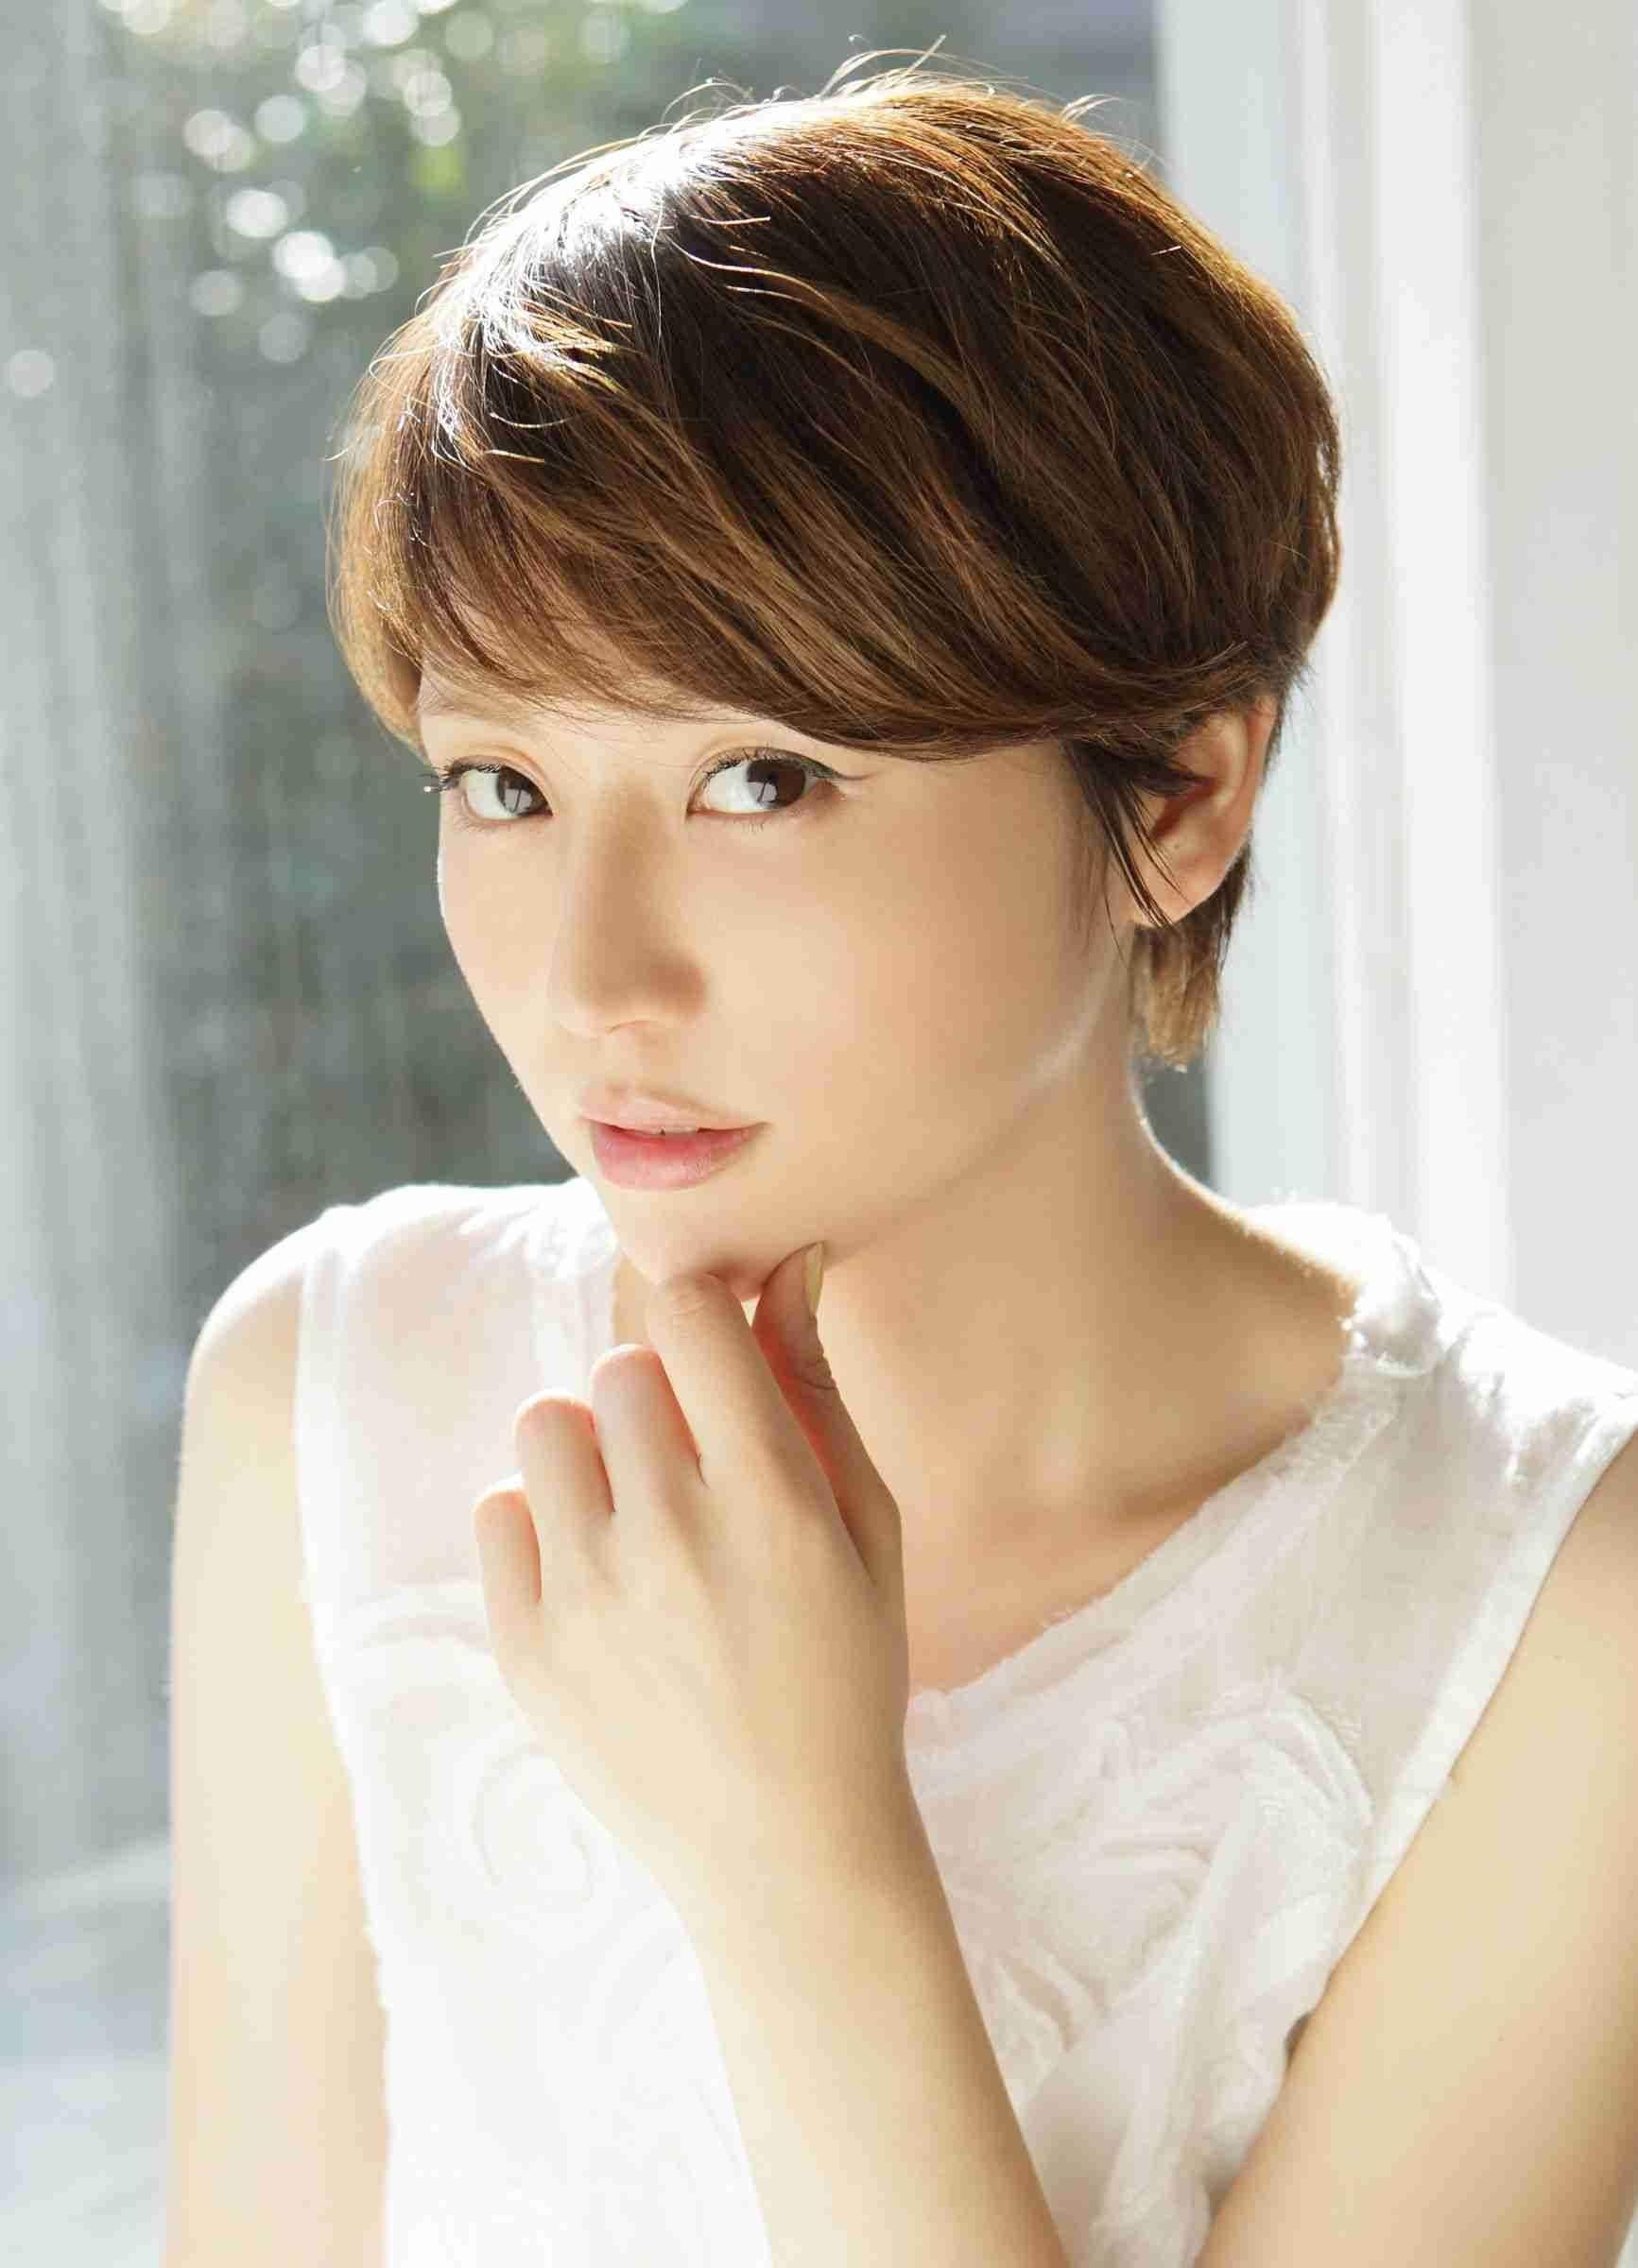 Korean Short Hair For Round Face | Highlights Hair inside Korean Short Hairstyle For Round Face Female